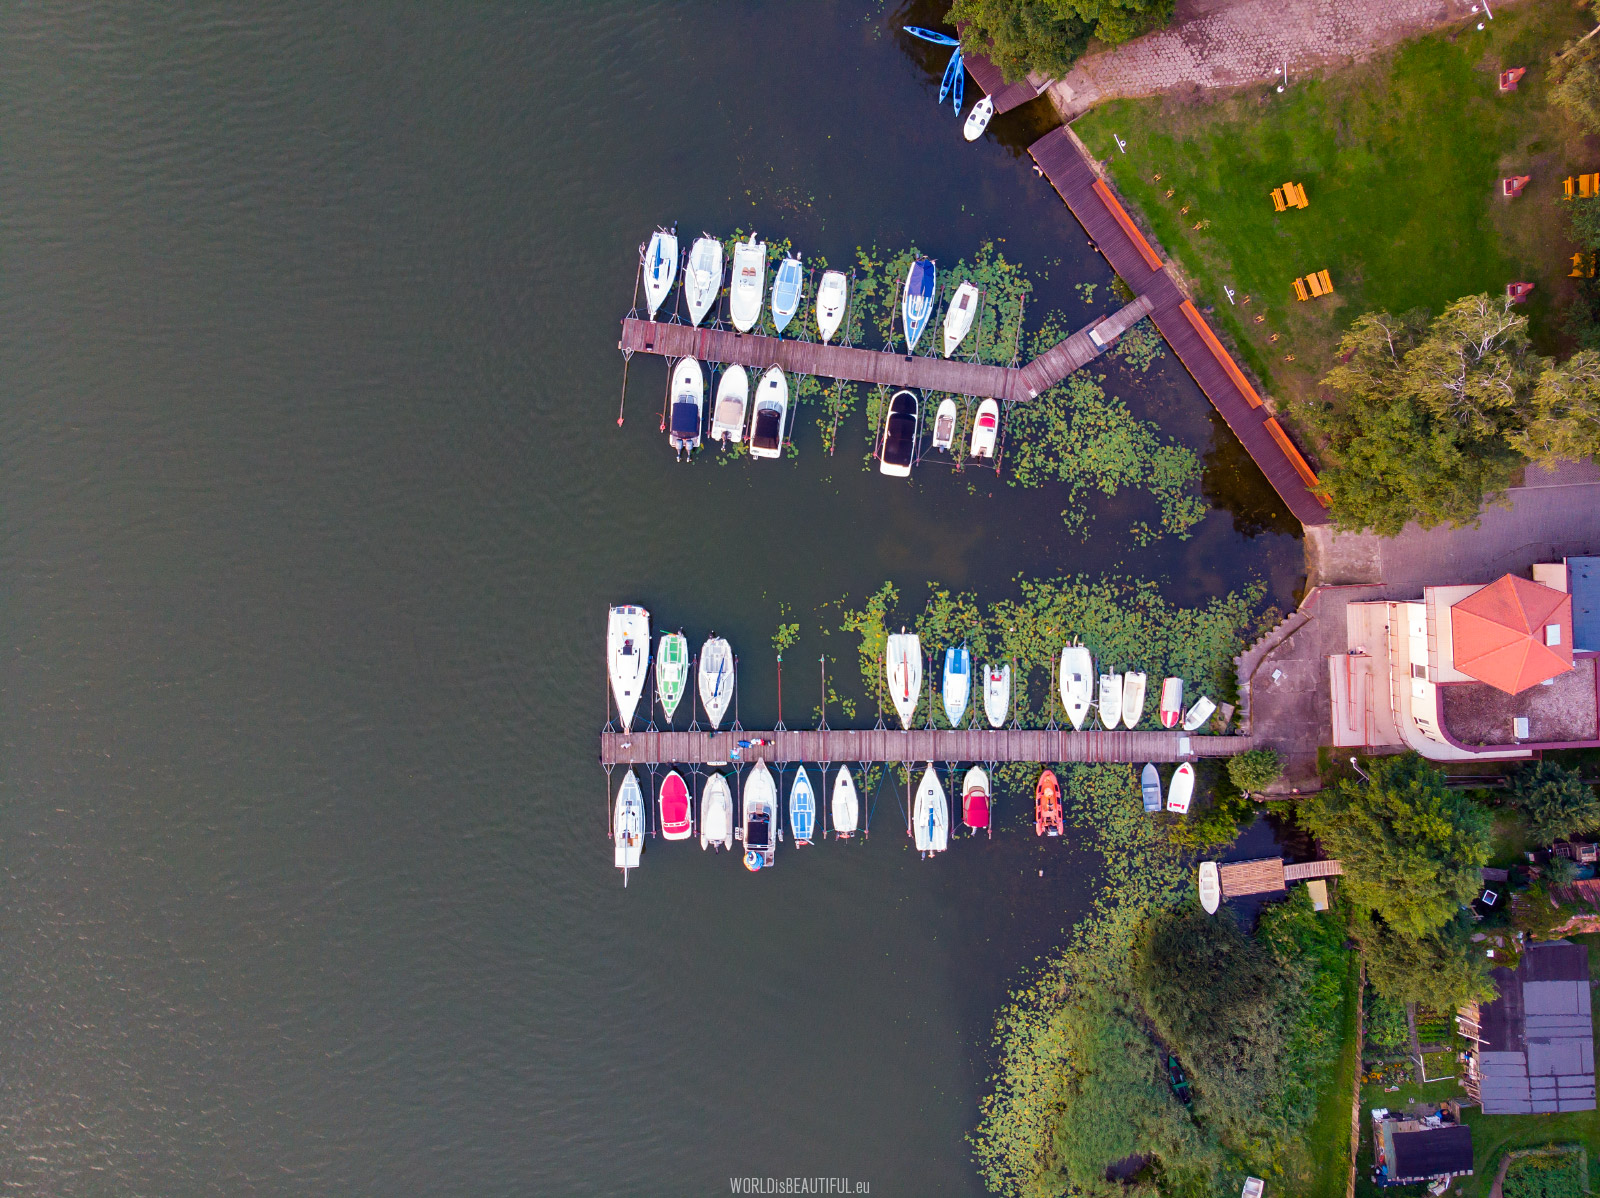 Marina on the Drwęckie Lake